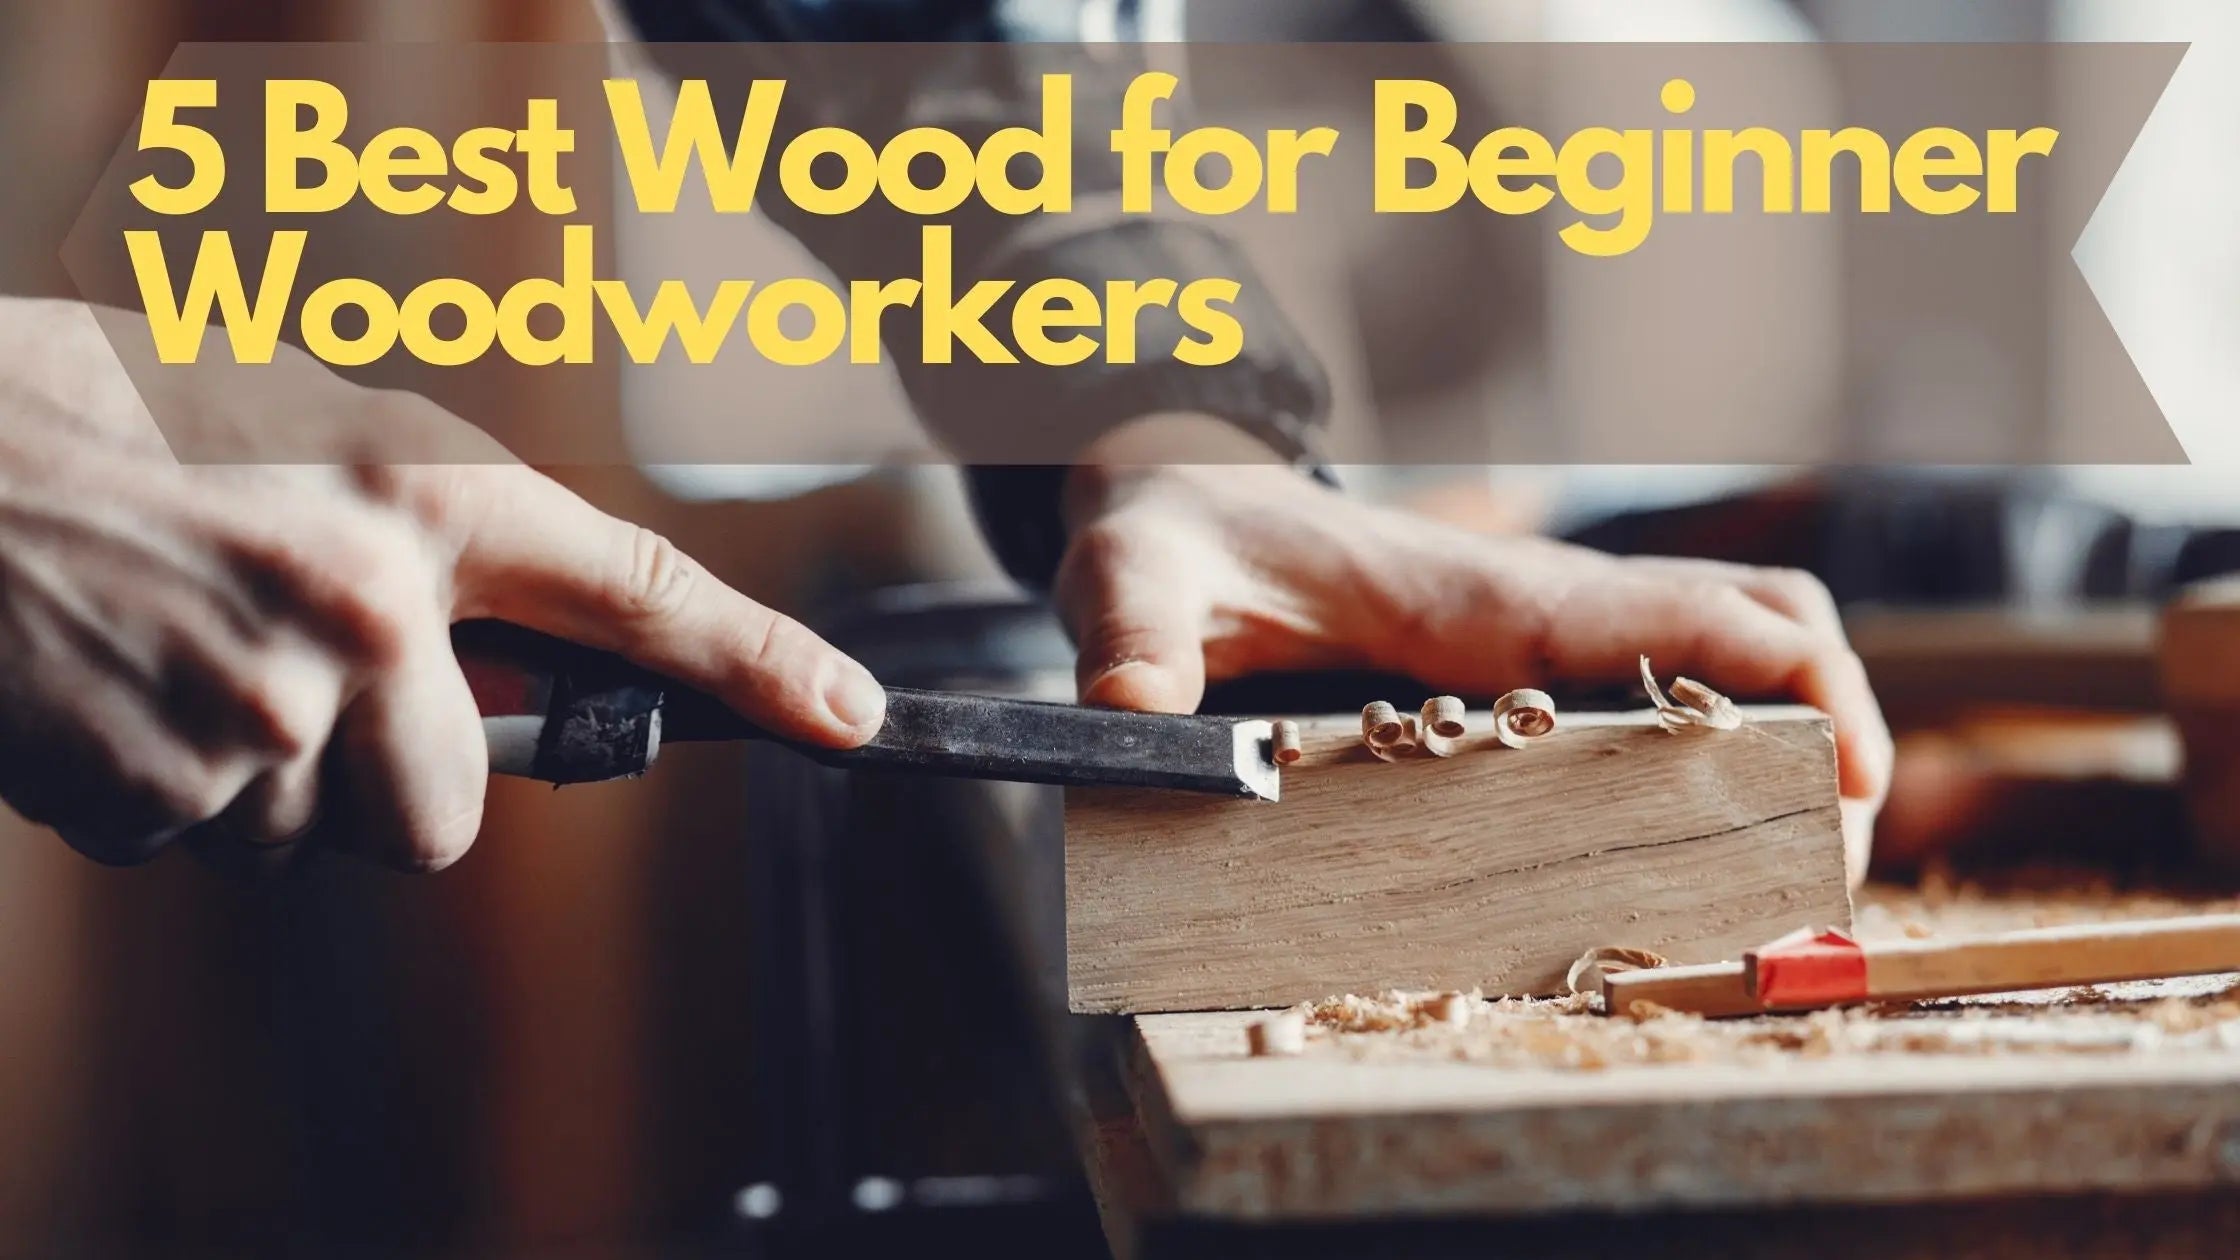 5 Best Wood for Beginner Woodworkers